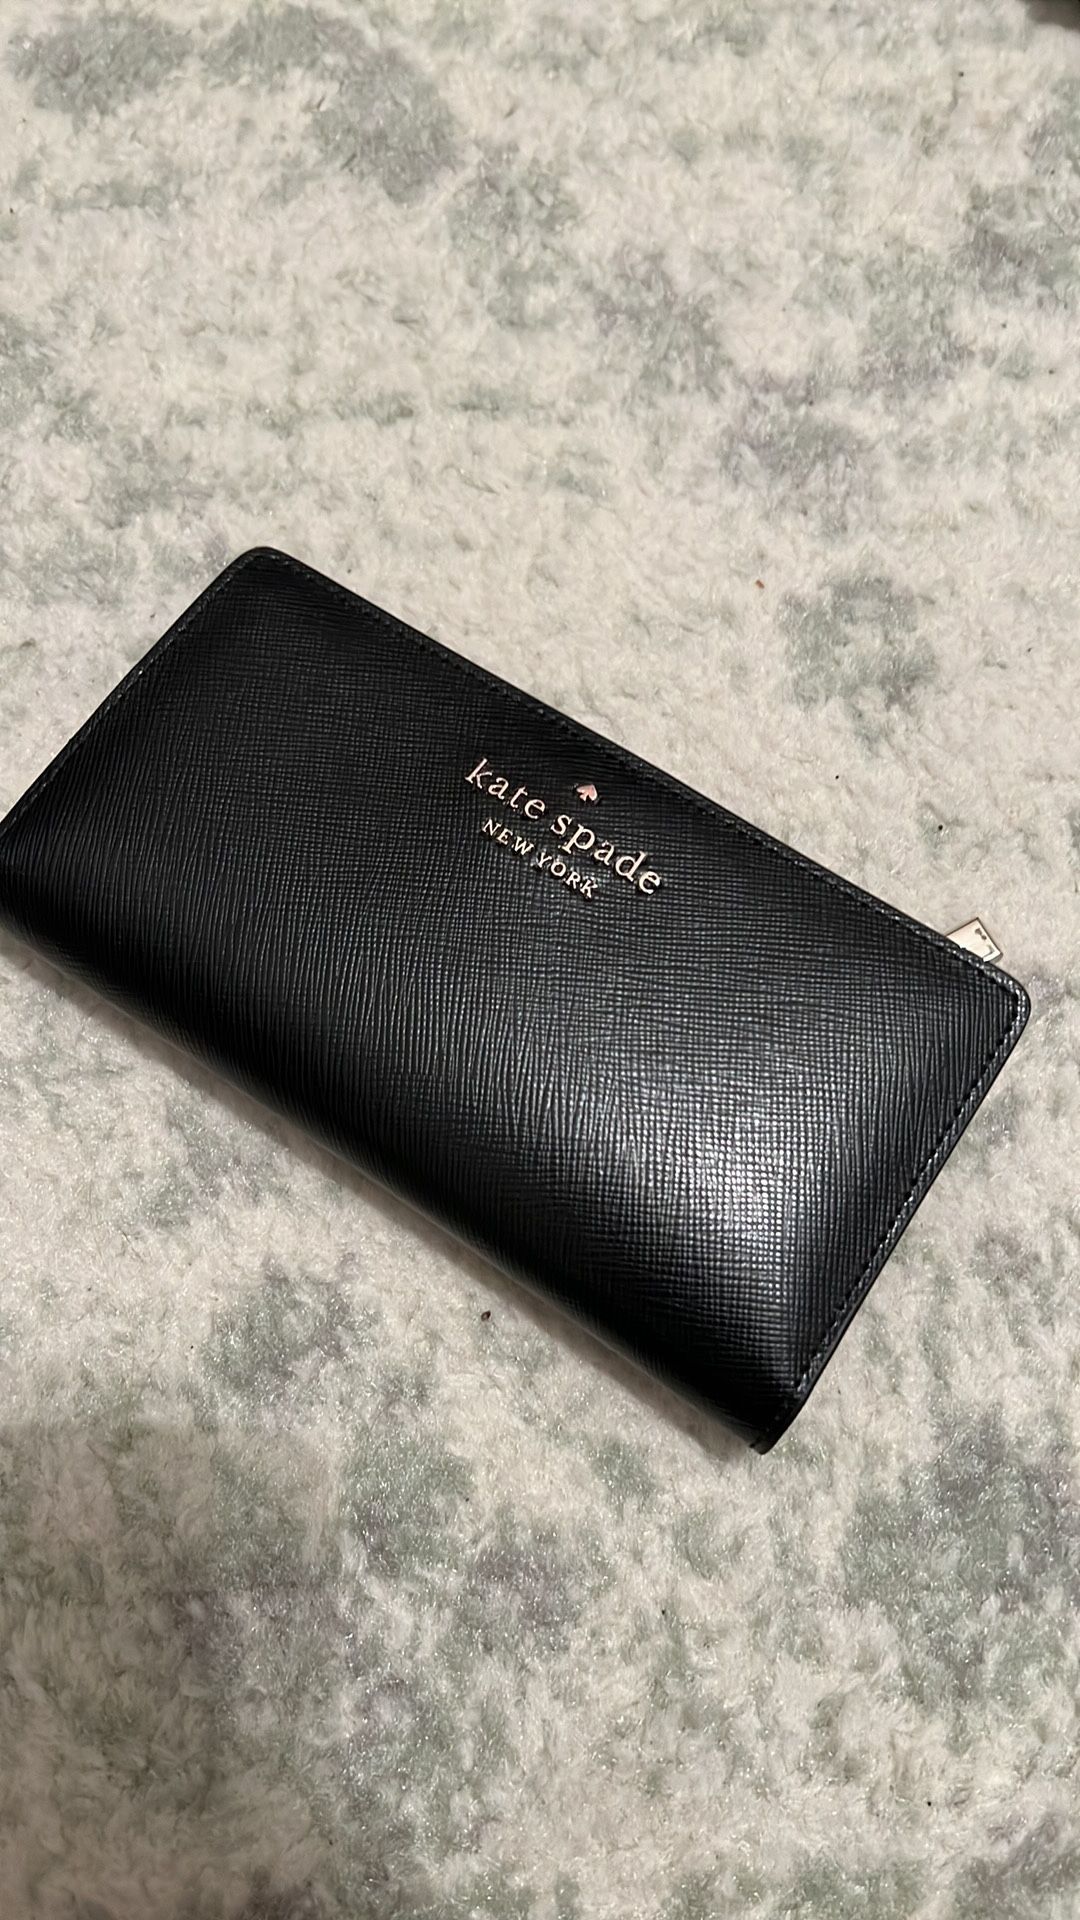 New Kate Spade Wallet